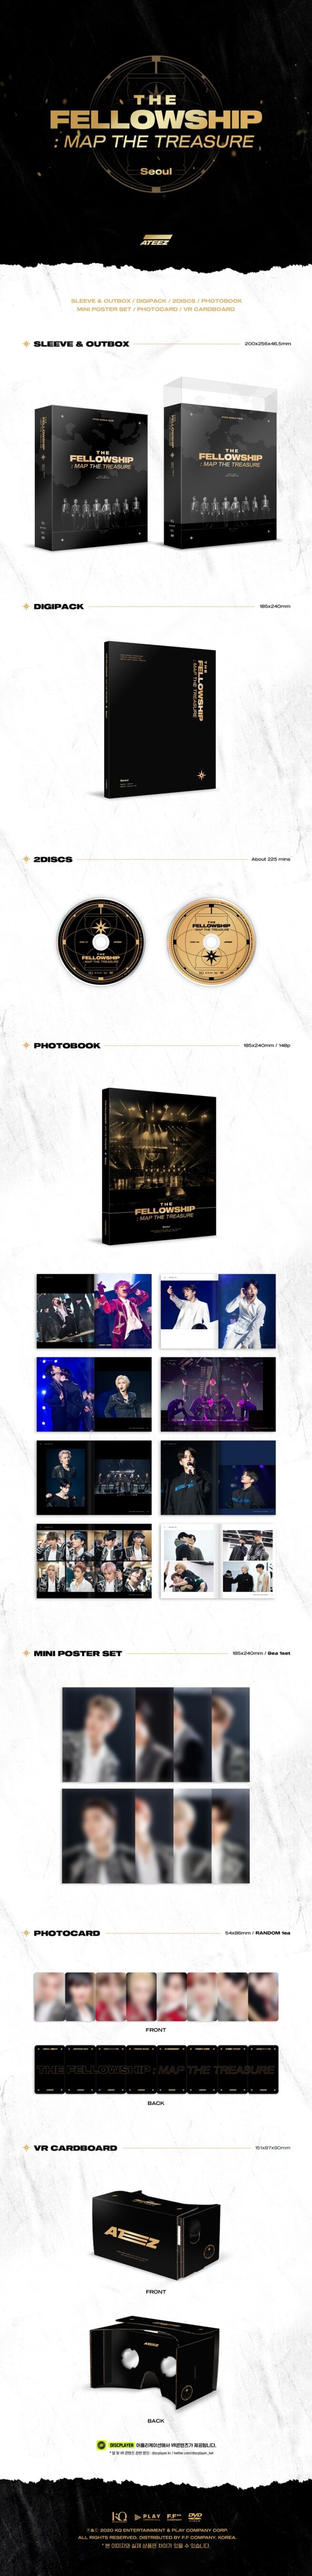 Ateez World Tour The Fellowship Map The Treasure Seoul DVD (2 Disc